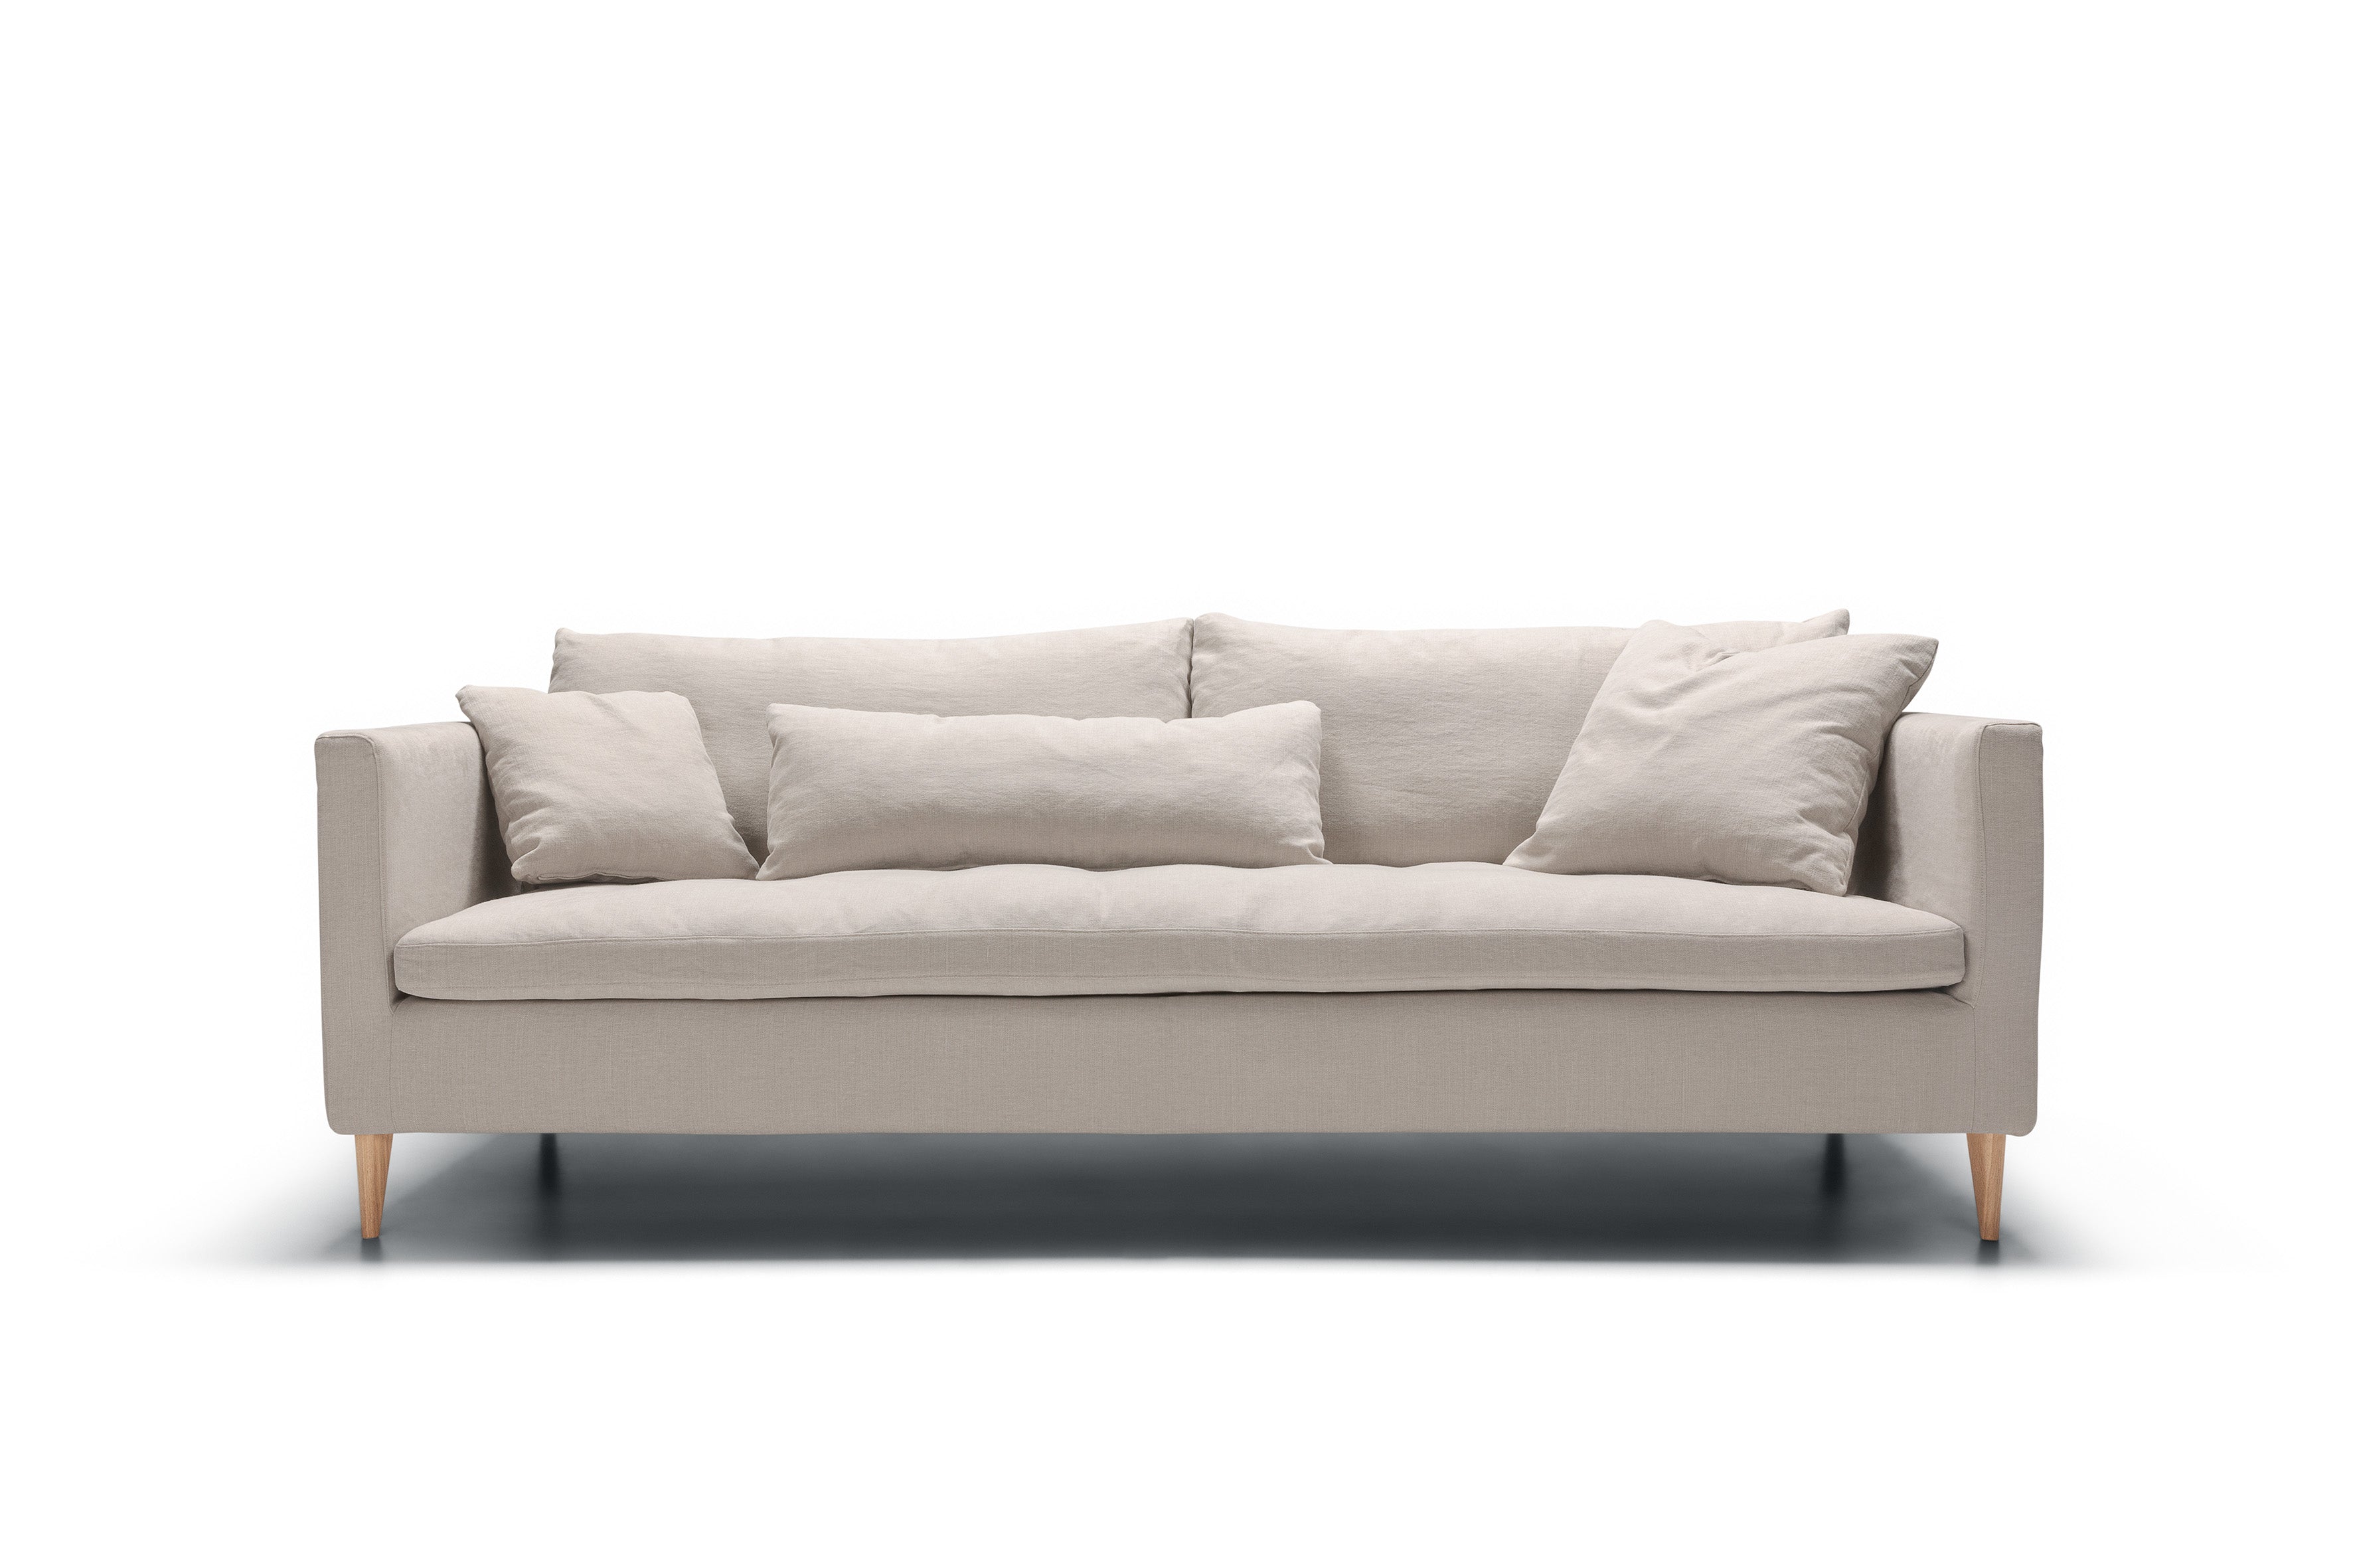 Mastrella Lana 3 Seater Sofa